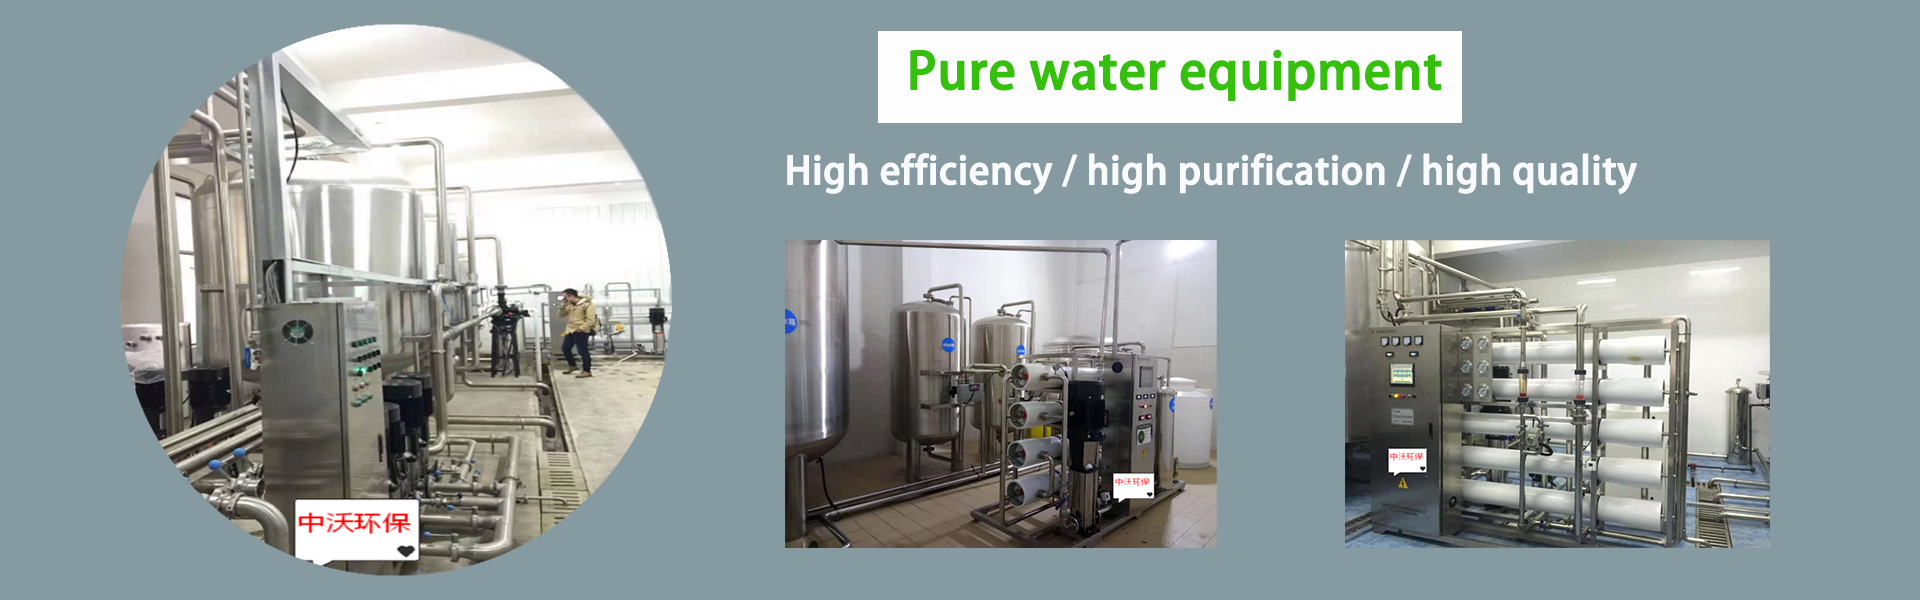 water treatment equipment,water purification equipment,environmental protection equipment,Foshan zhongwo Environmental Protection Technology Co Ltd.